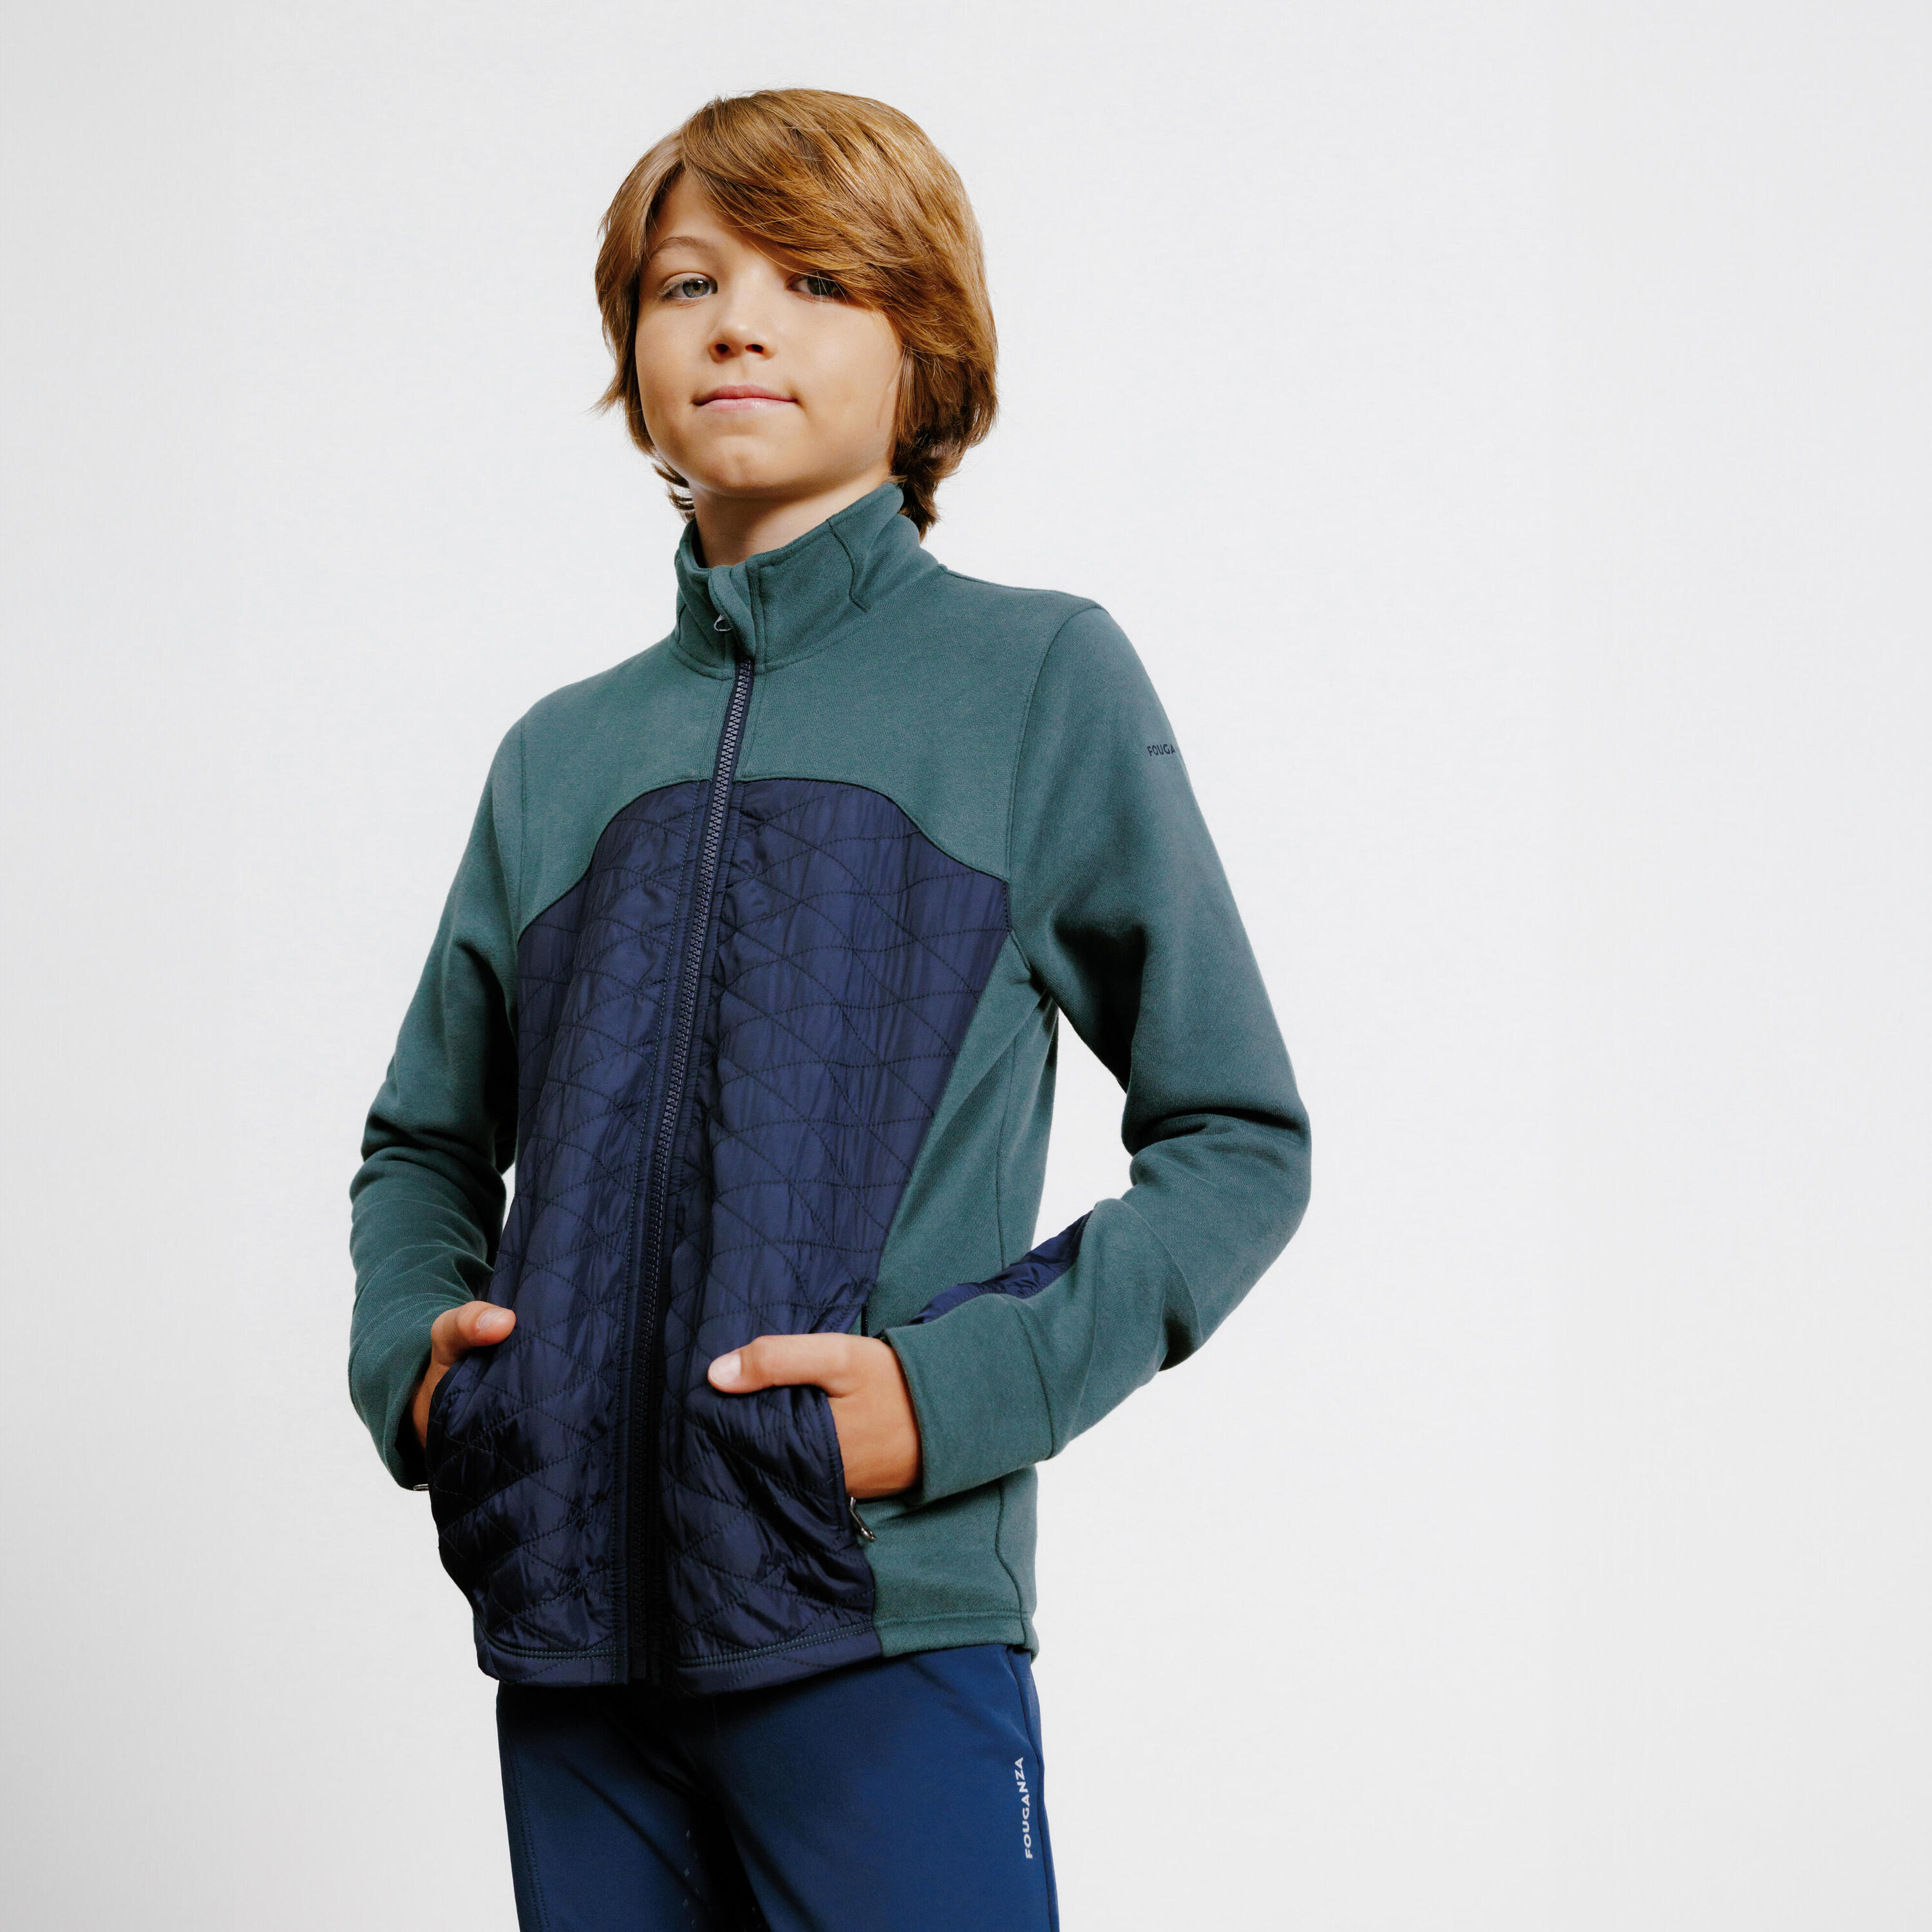 Kids' Horse Riding Dual Fabric Zip Sweatshirt 500 - Green/Navy 1/6